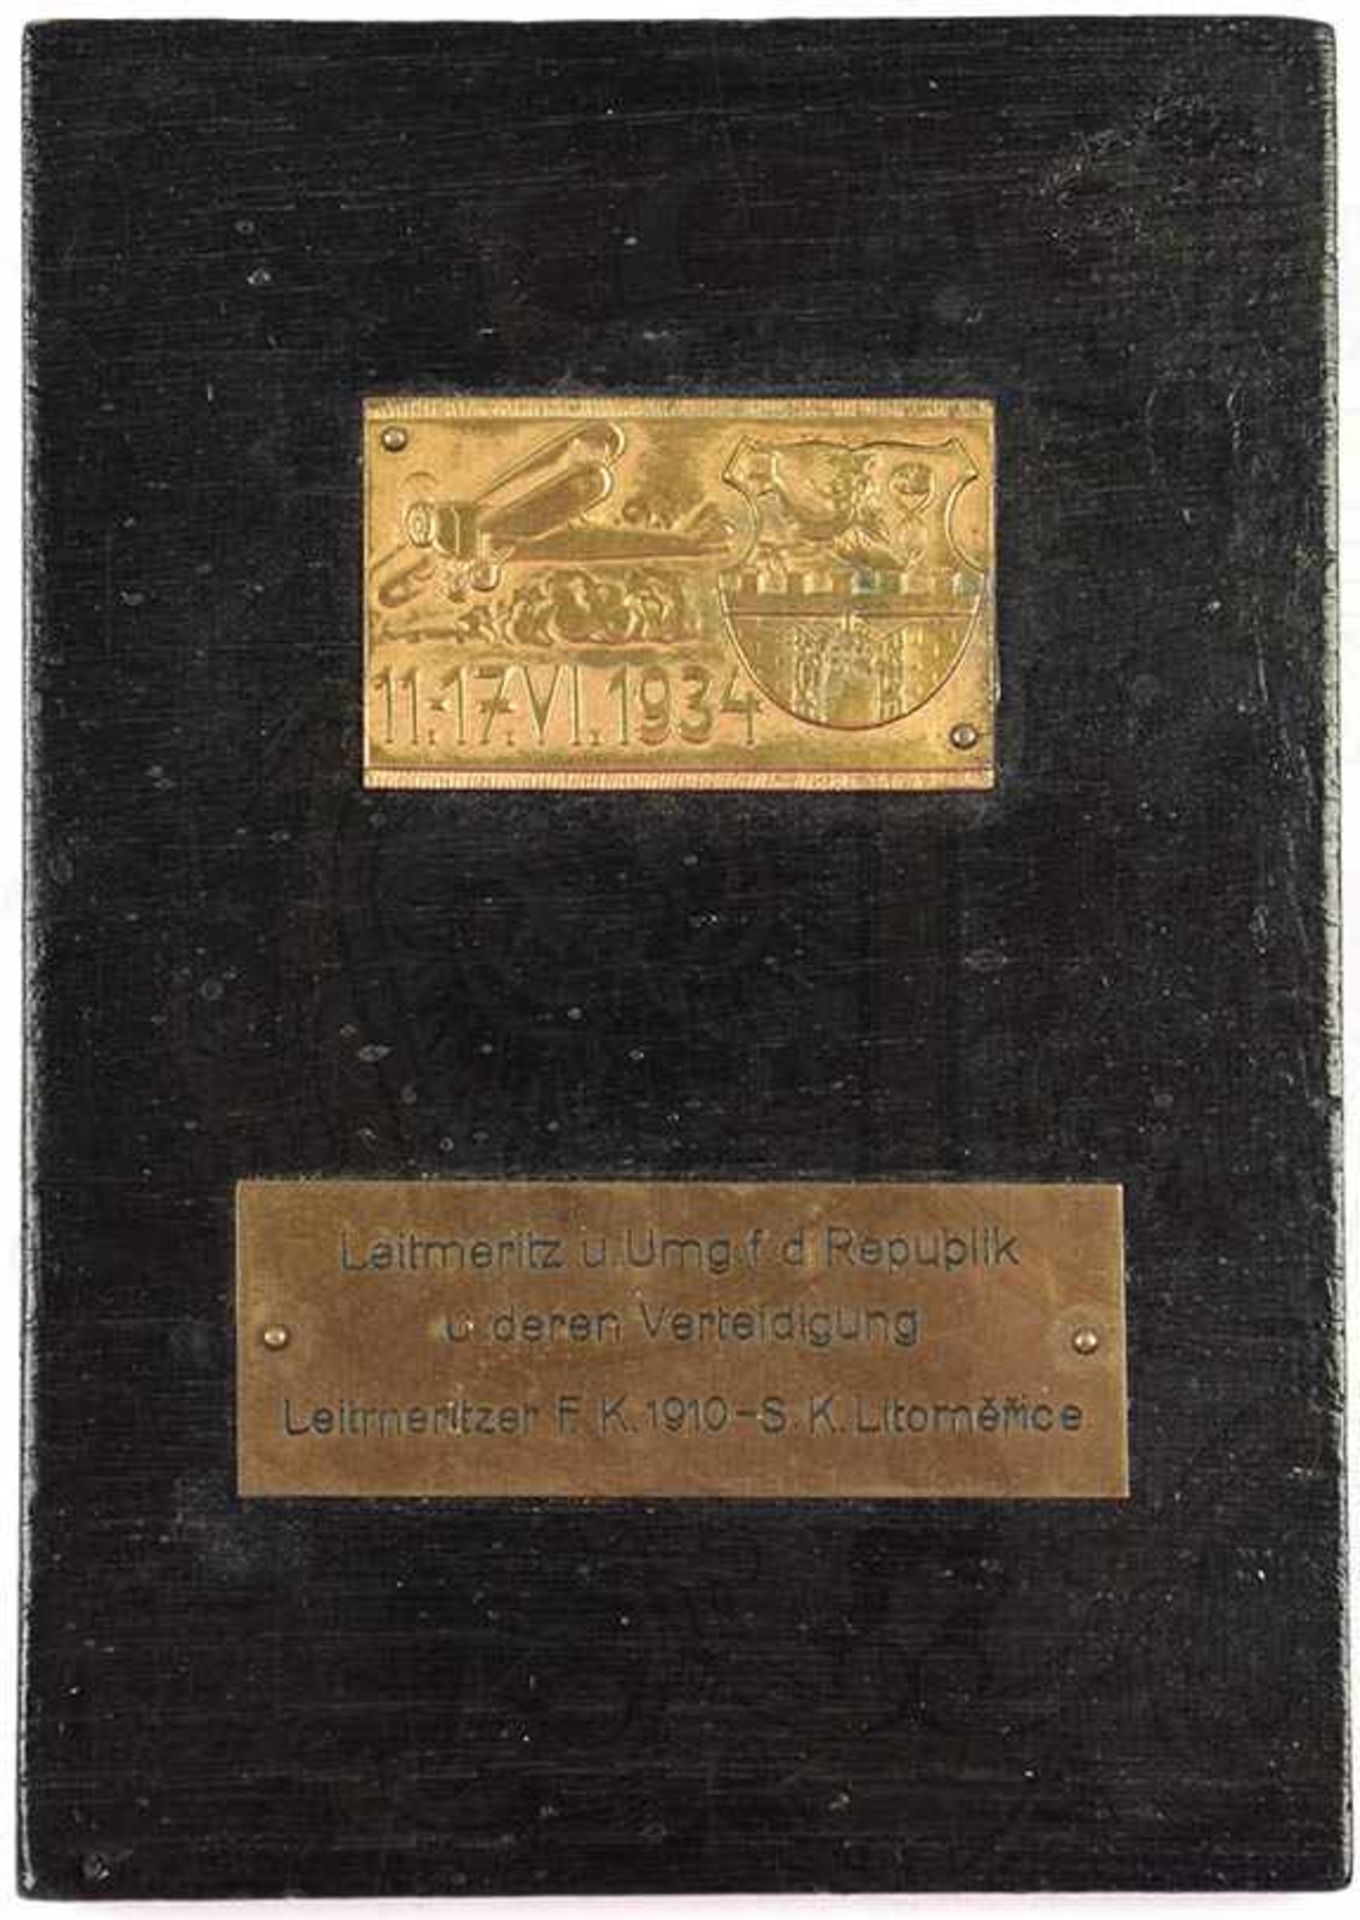 PLAKETTE FLUGWOCHE LEITMERITZ, 11.-17. VI. 1934, Buntmetall/vergld., m. Abb. e. Flugzeugs u. d.